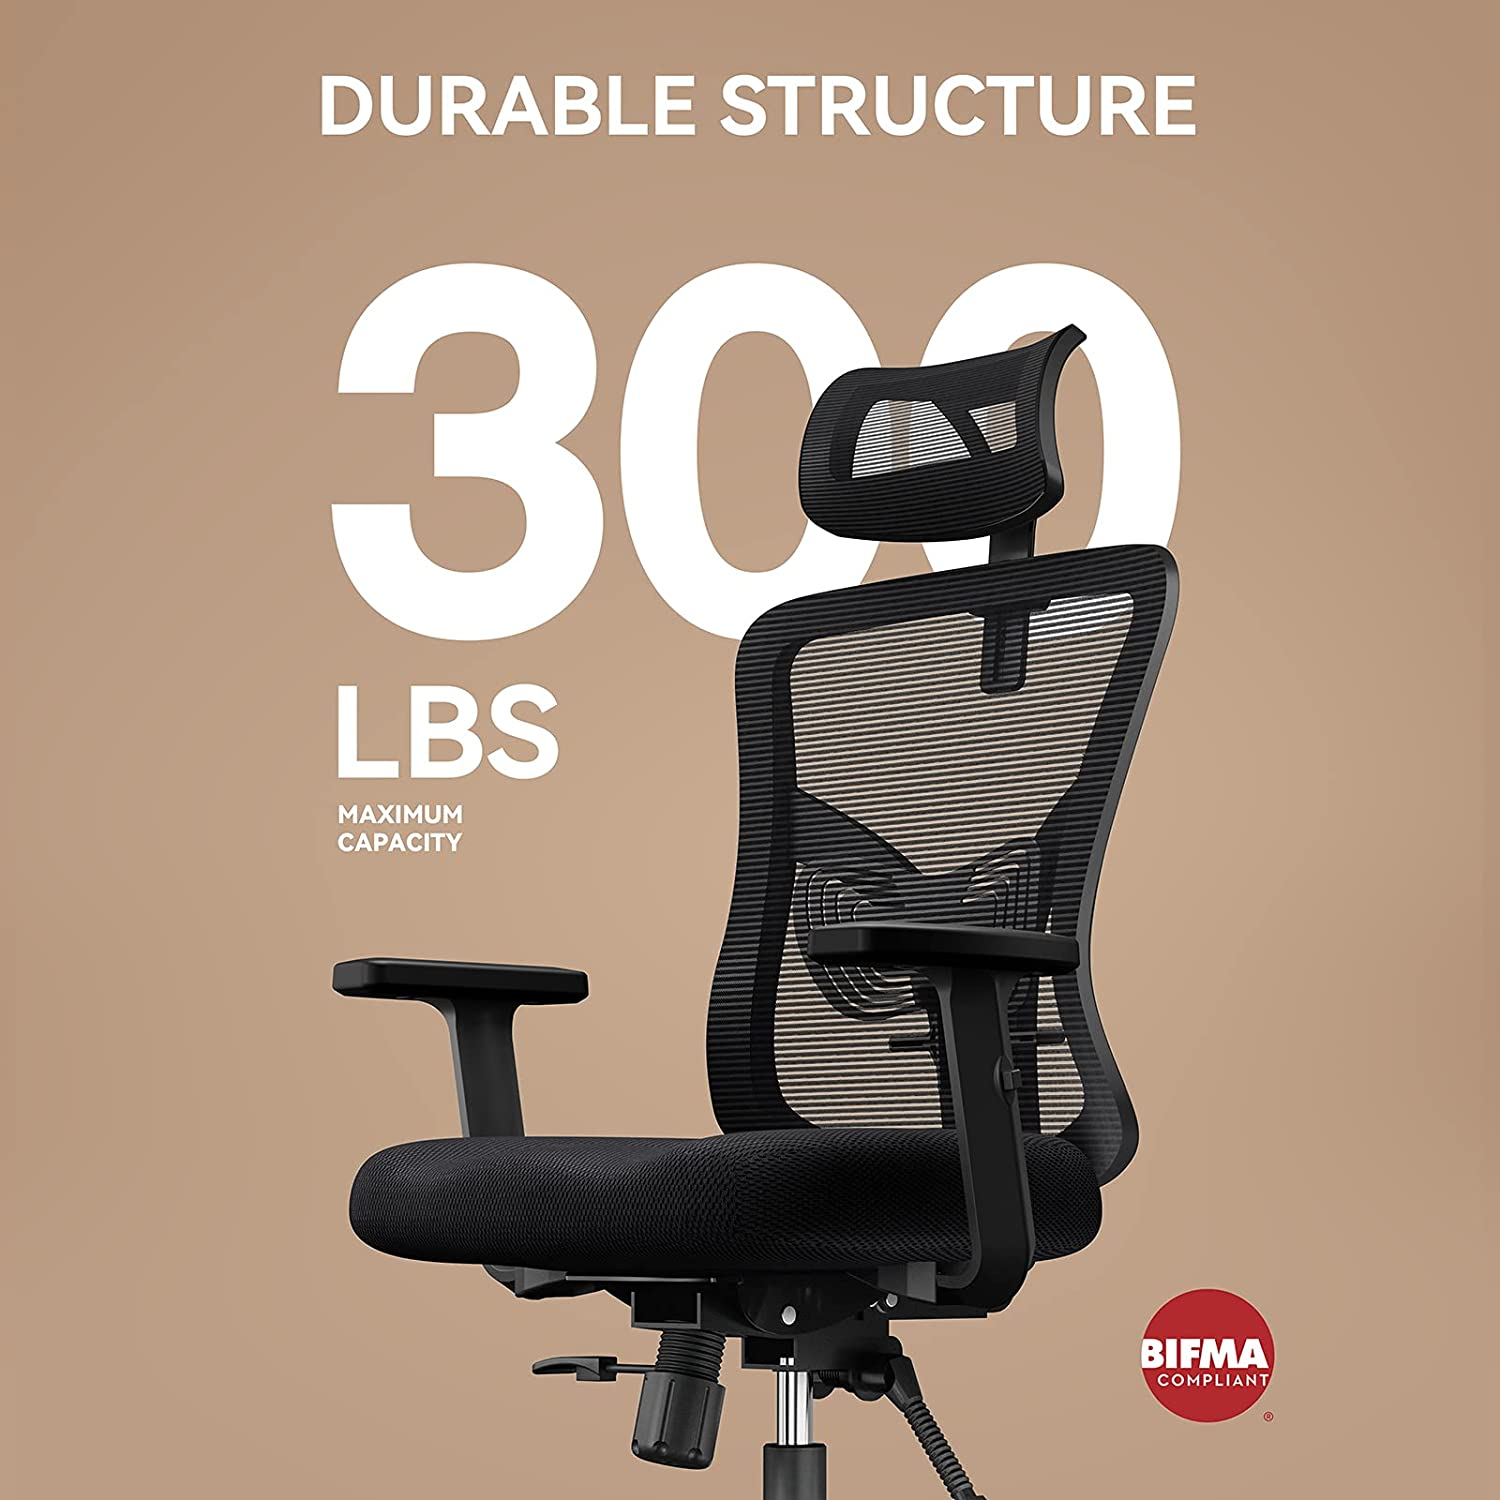 https://www.wyida.com/ergonomic-office-chair-adjustable-headrest-product/